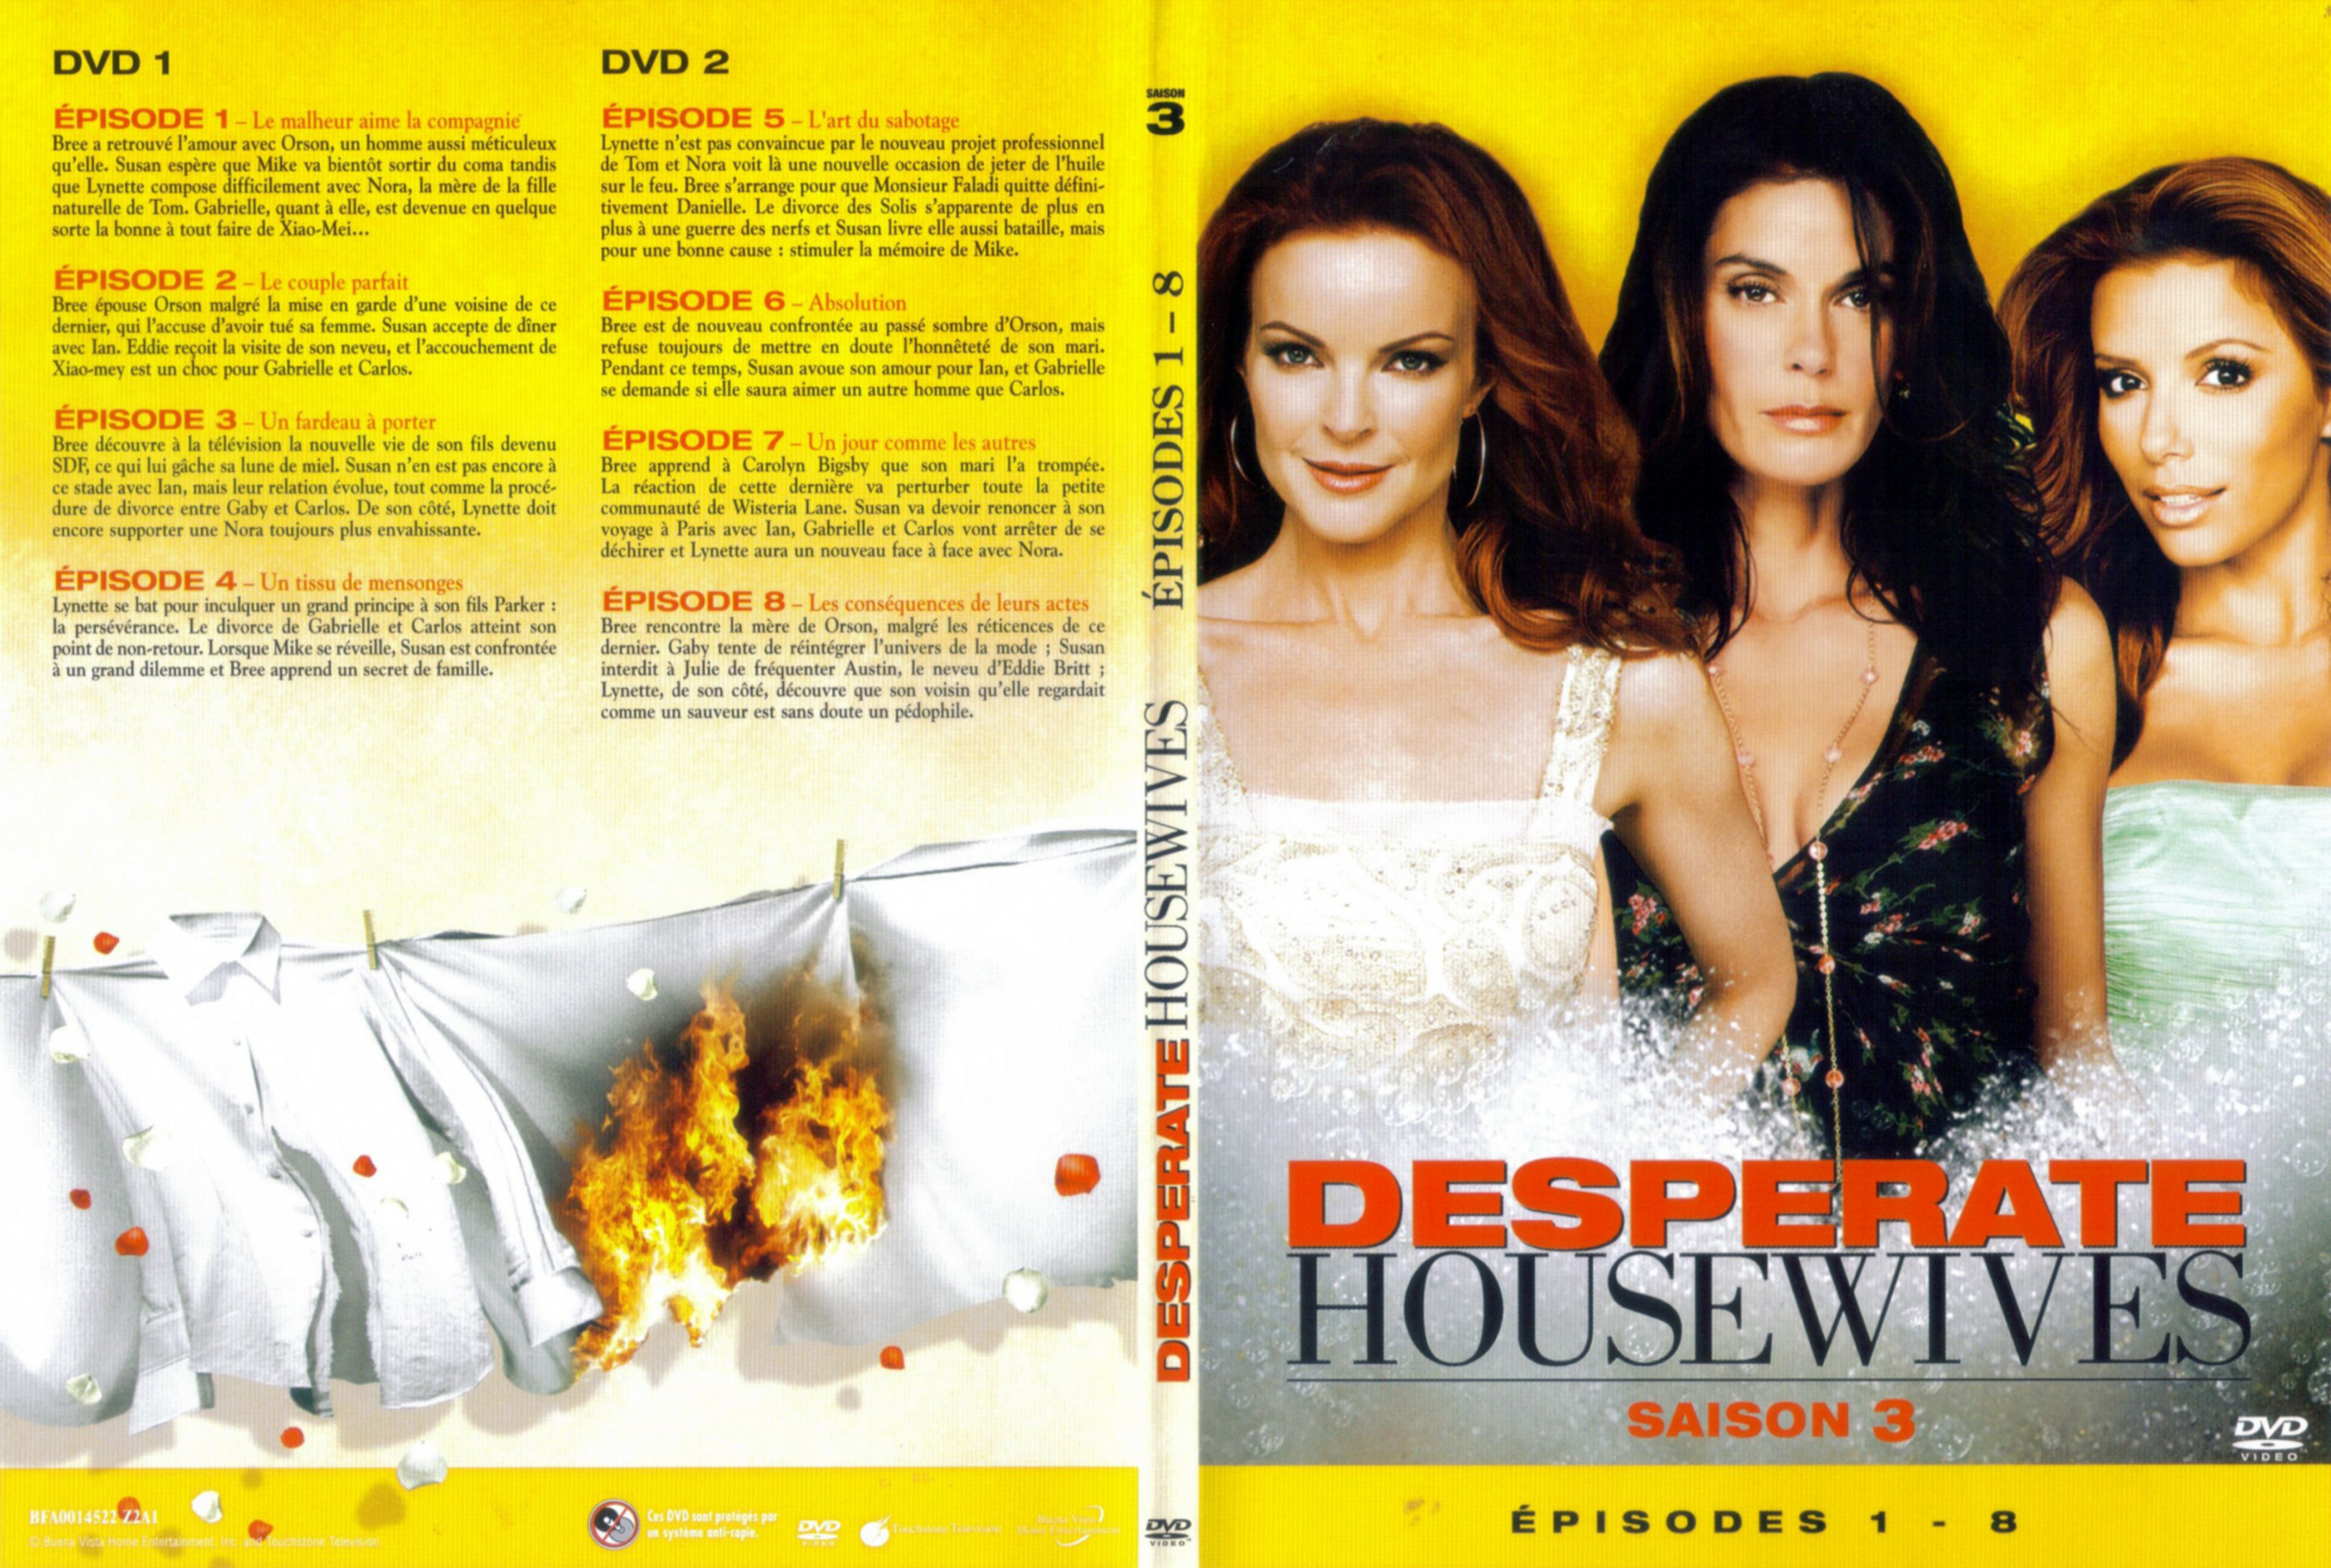 Jaquette DVD Desperate housewives Saison 3 DVD 1